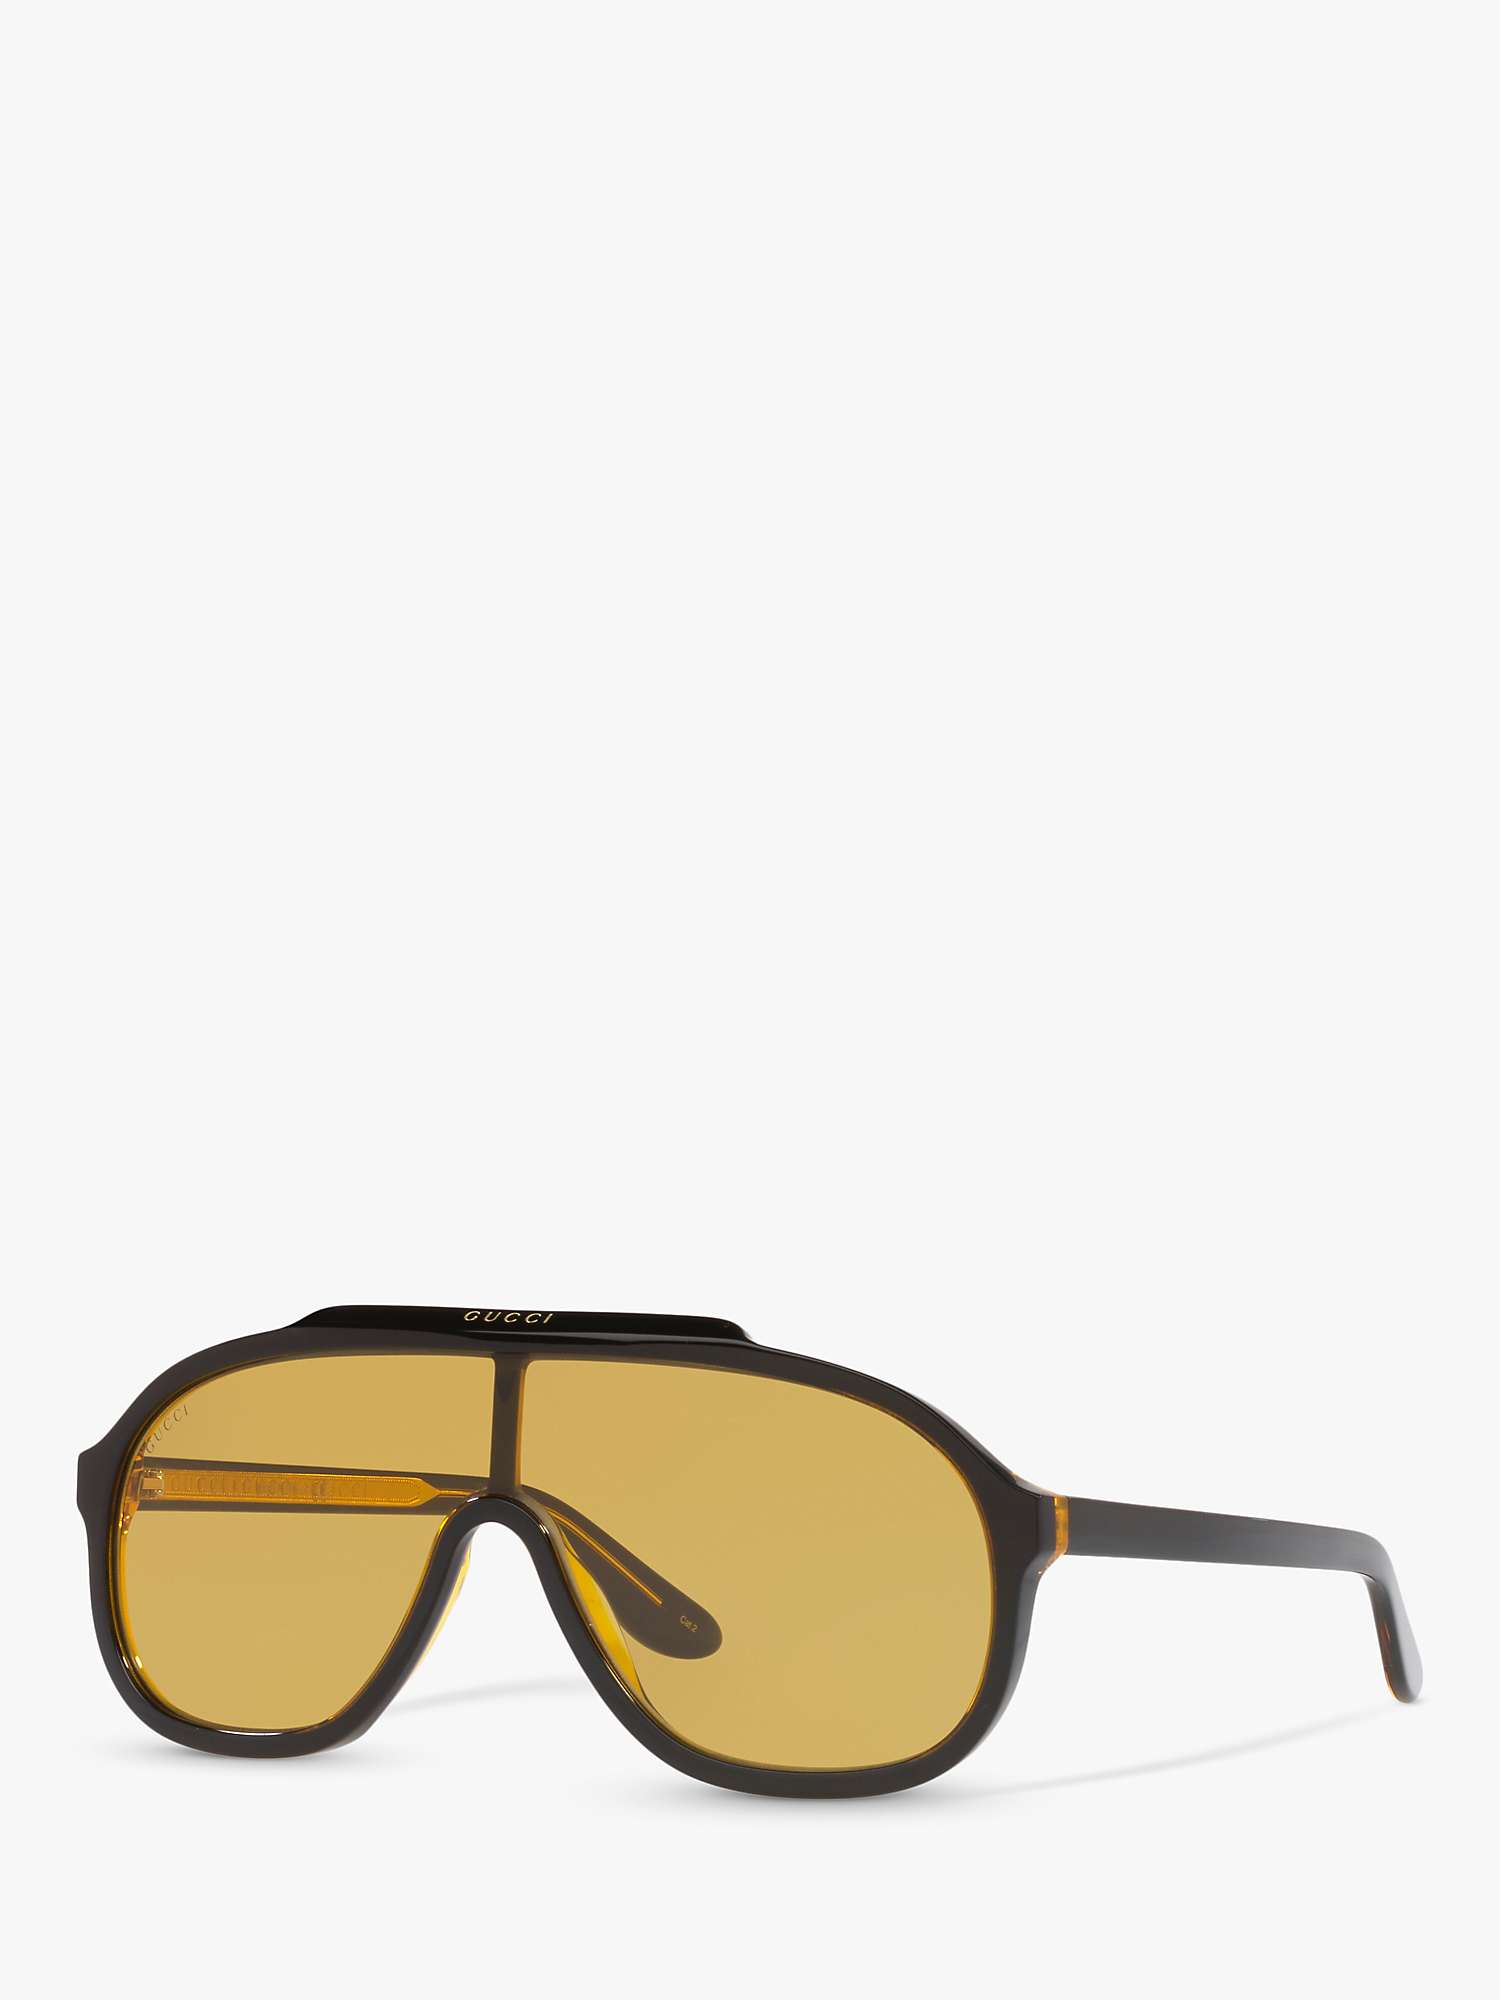 Buy Gucci GG1038S Men's s Pilot Sunglasses, Black/Yellow Online at johnlewis.com